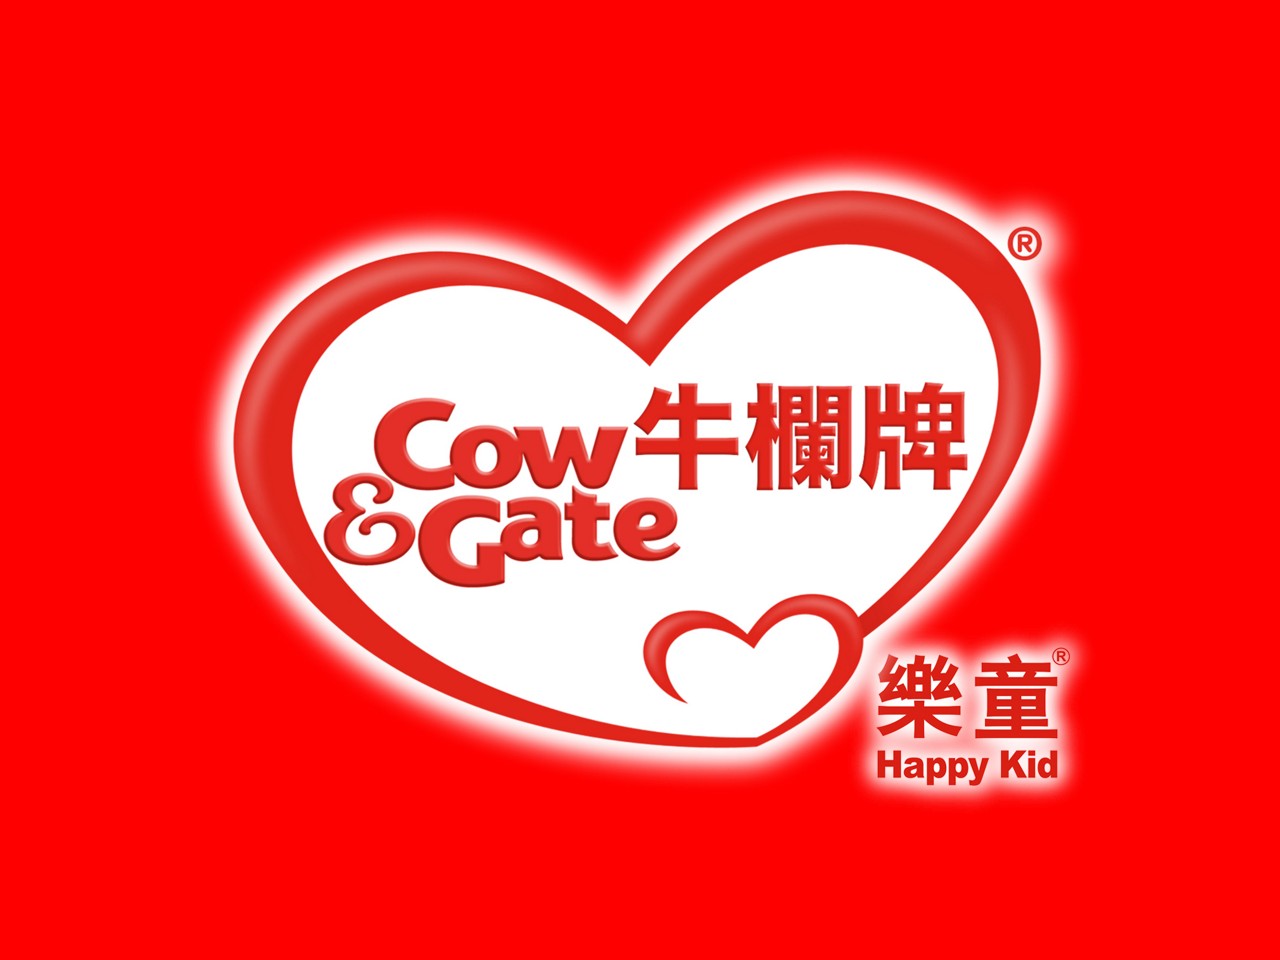 Cow & Gate logo hk 2019 red